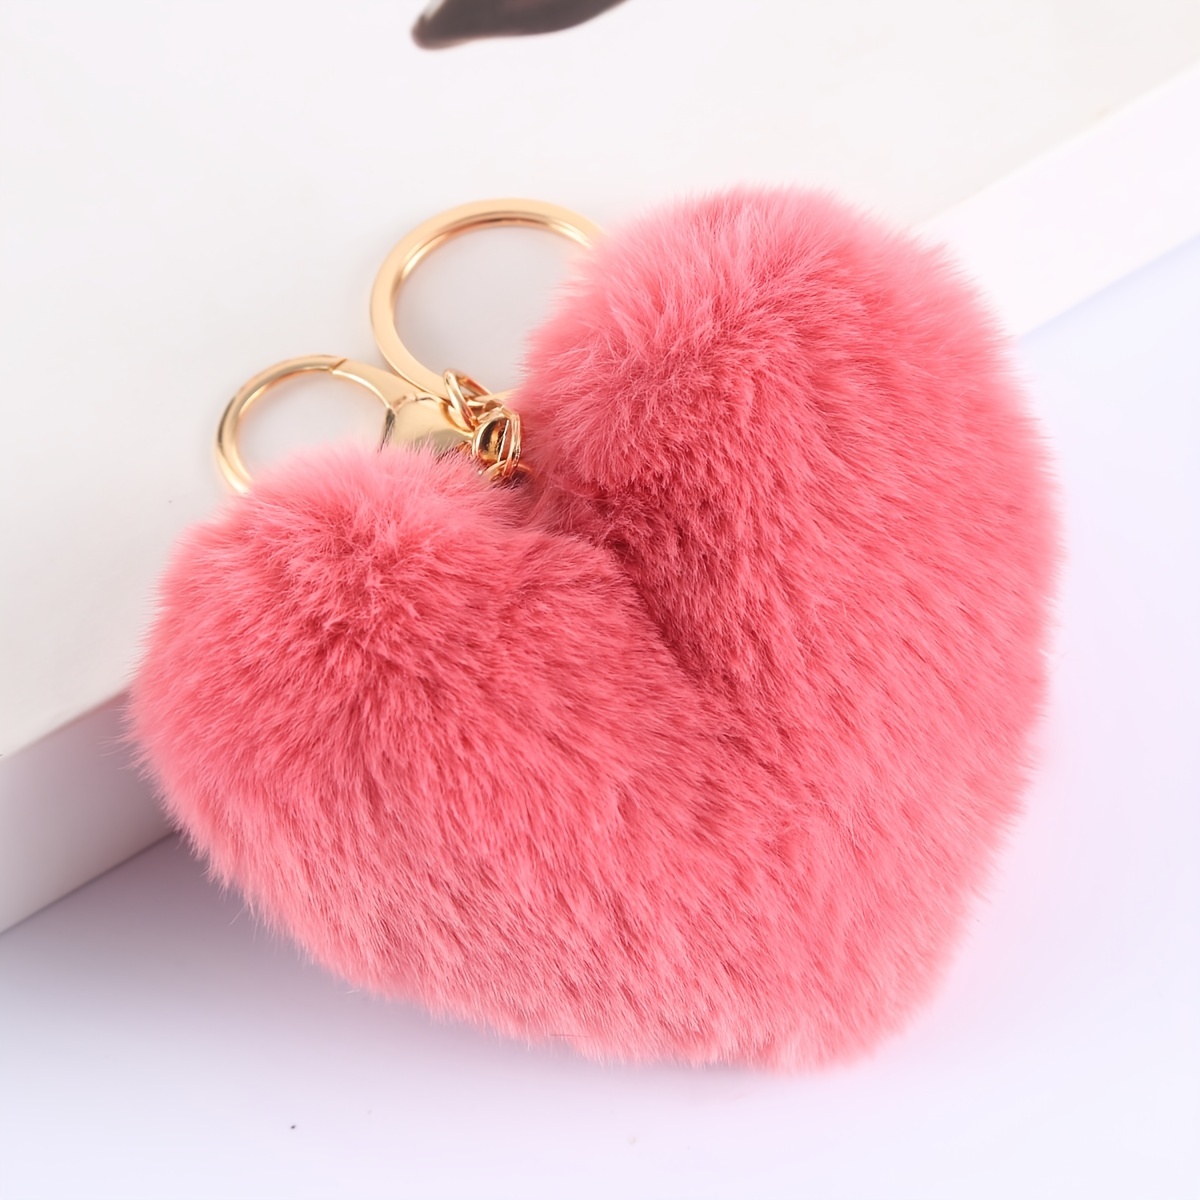 Heart Bag Charm Key Ring Fob Keychain Purse Charm Red New